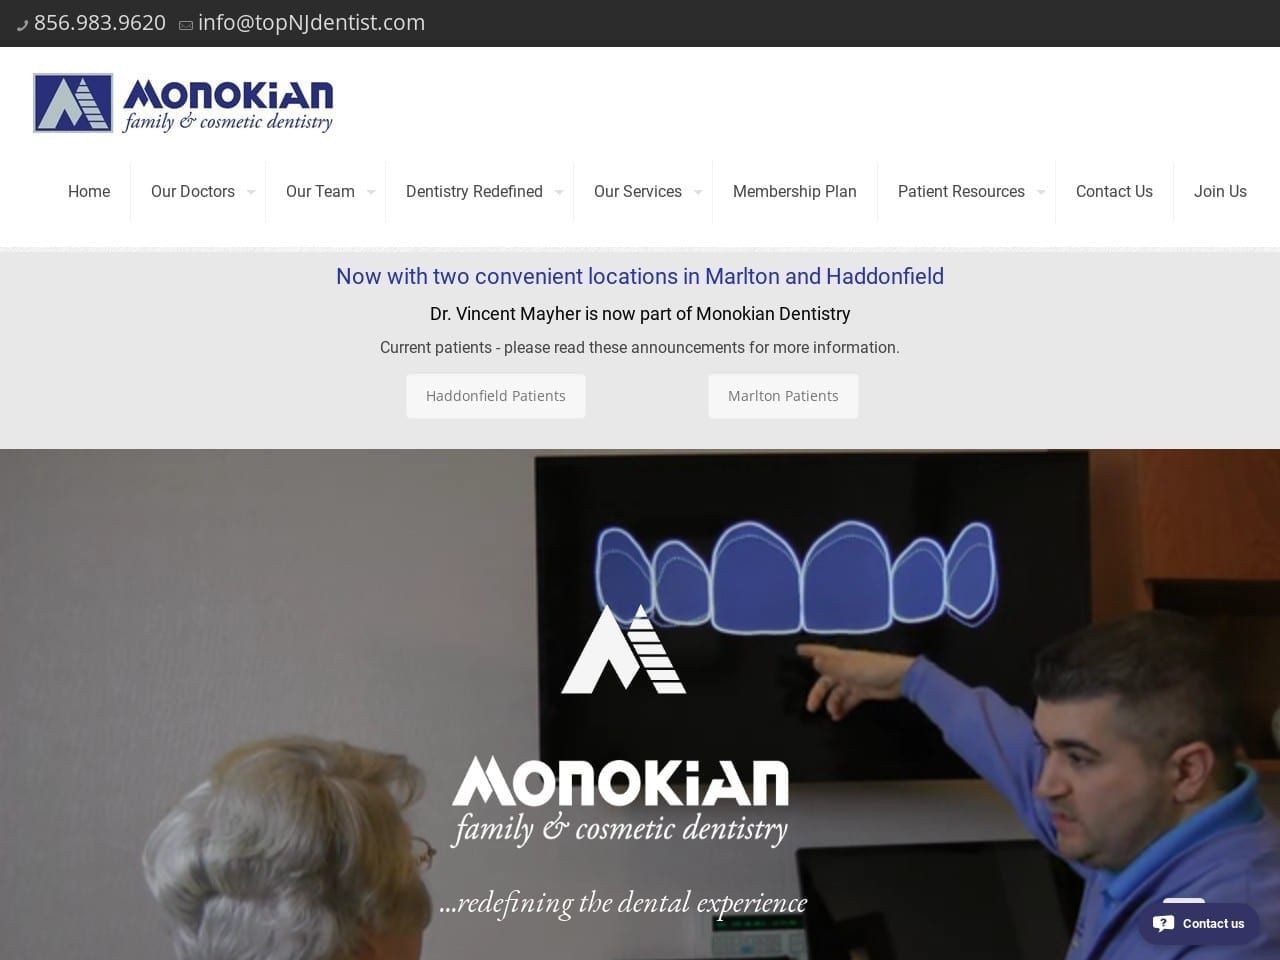 Monokian Family Dentist Website Screenshot from monokiandentistry.com